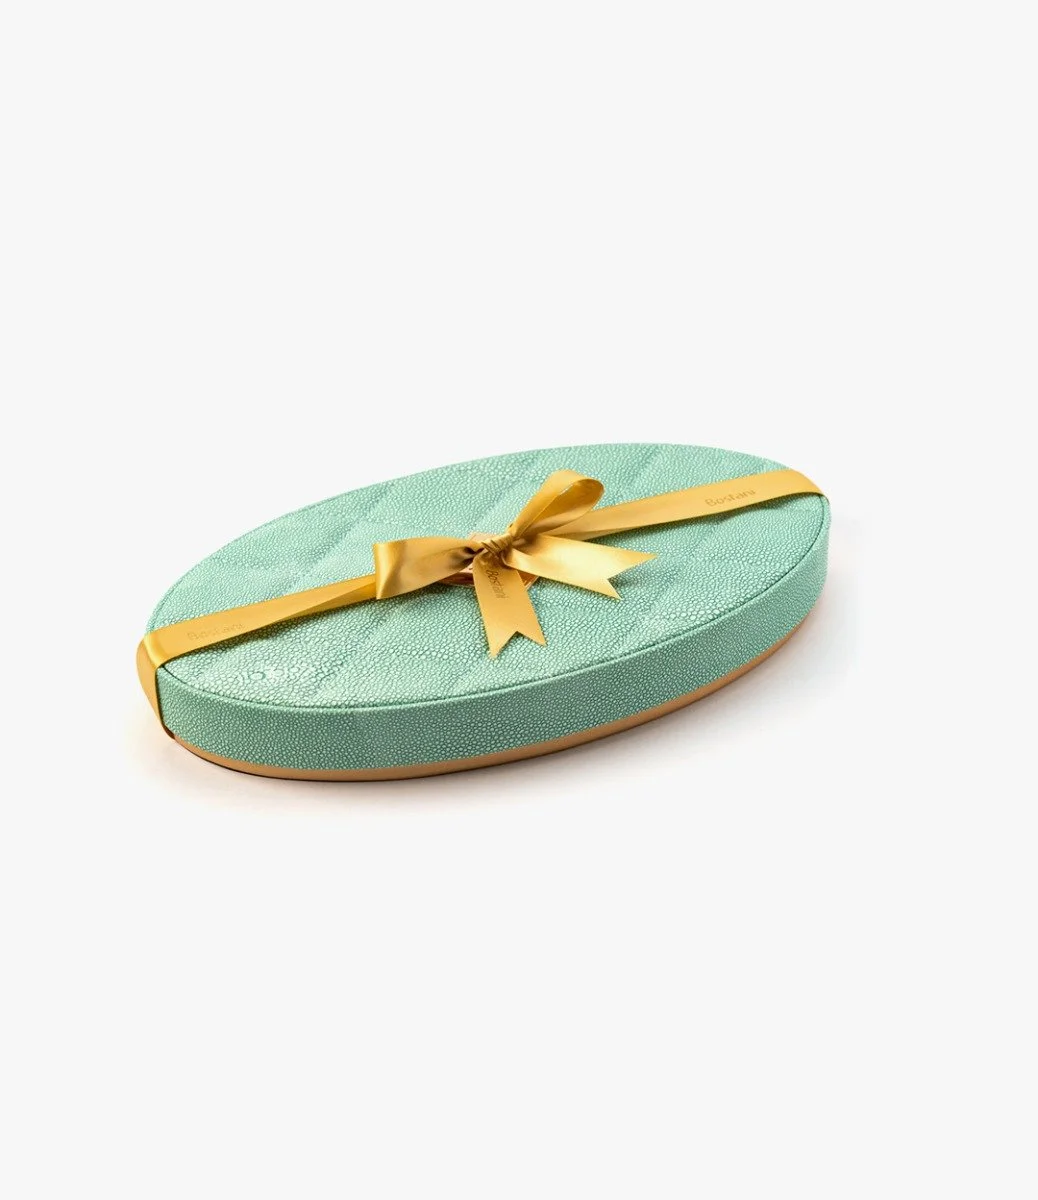 Oval Tiffany Luxury Box By Bostani  - Small